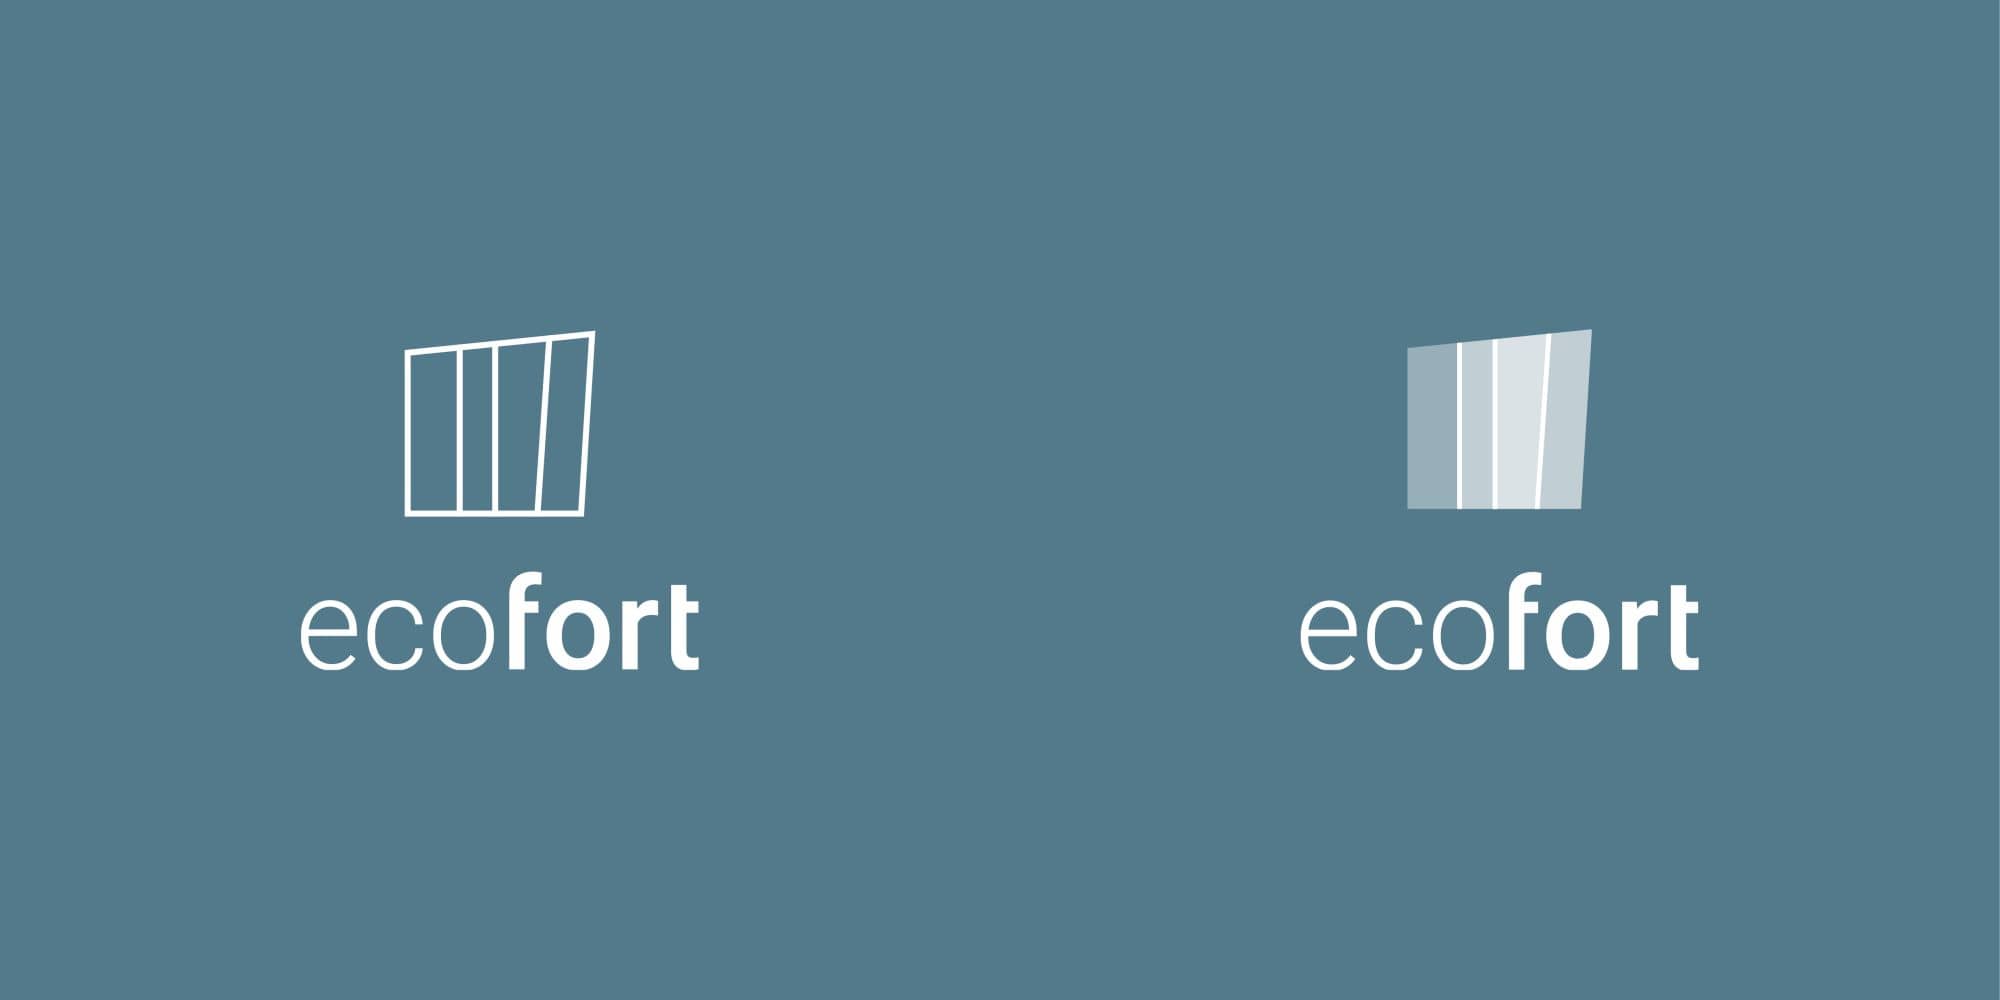 Ecofort - brand strategy and visual identity